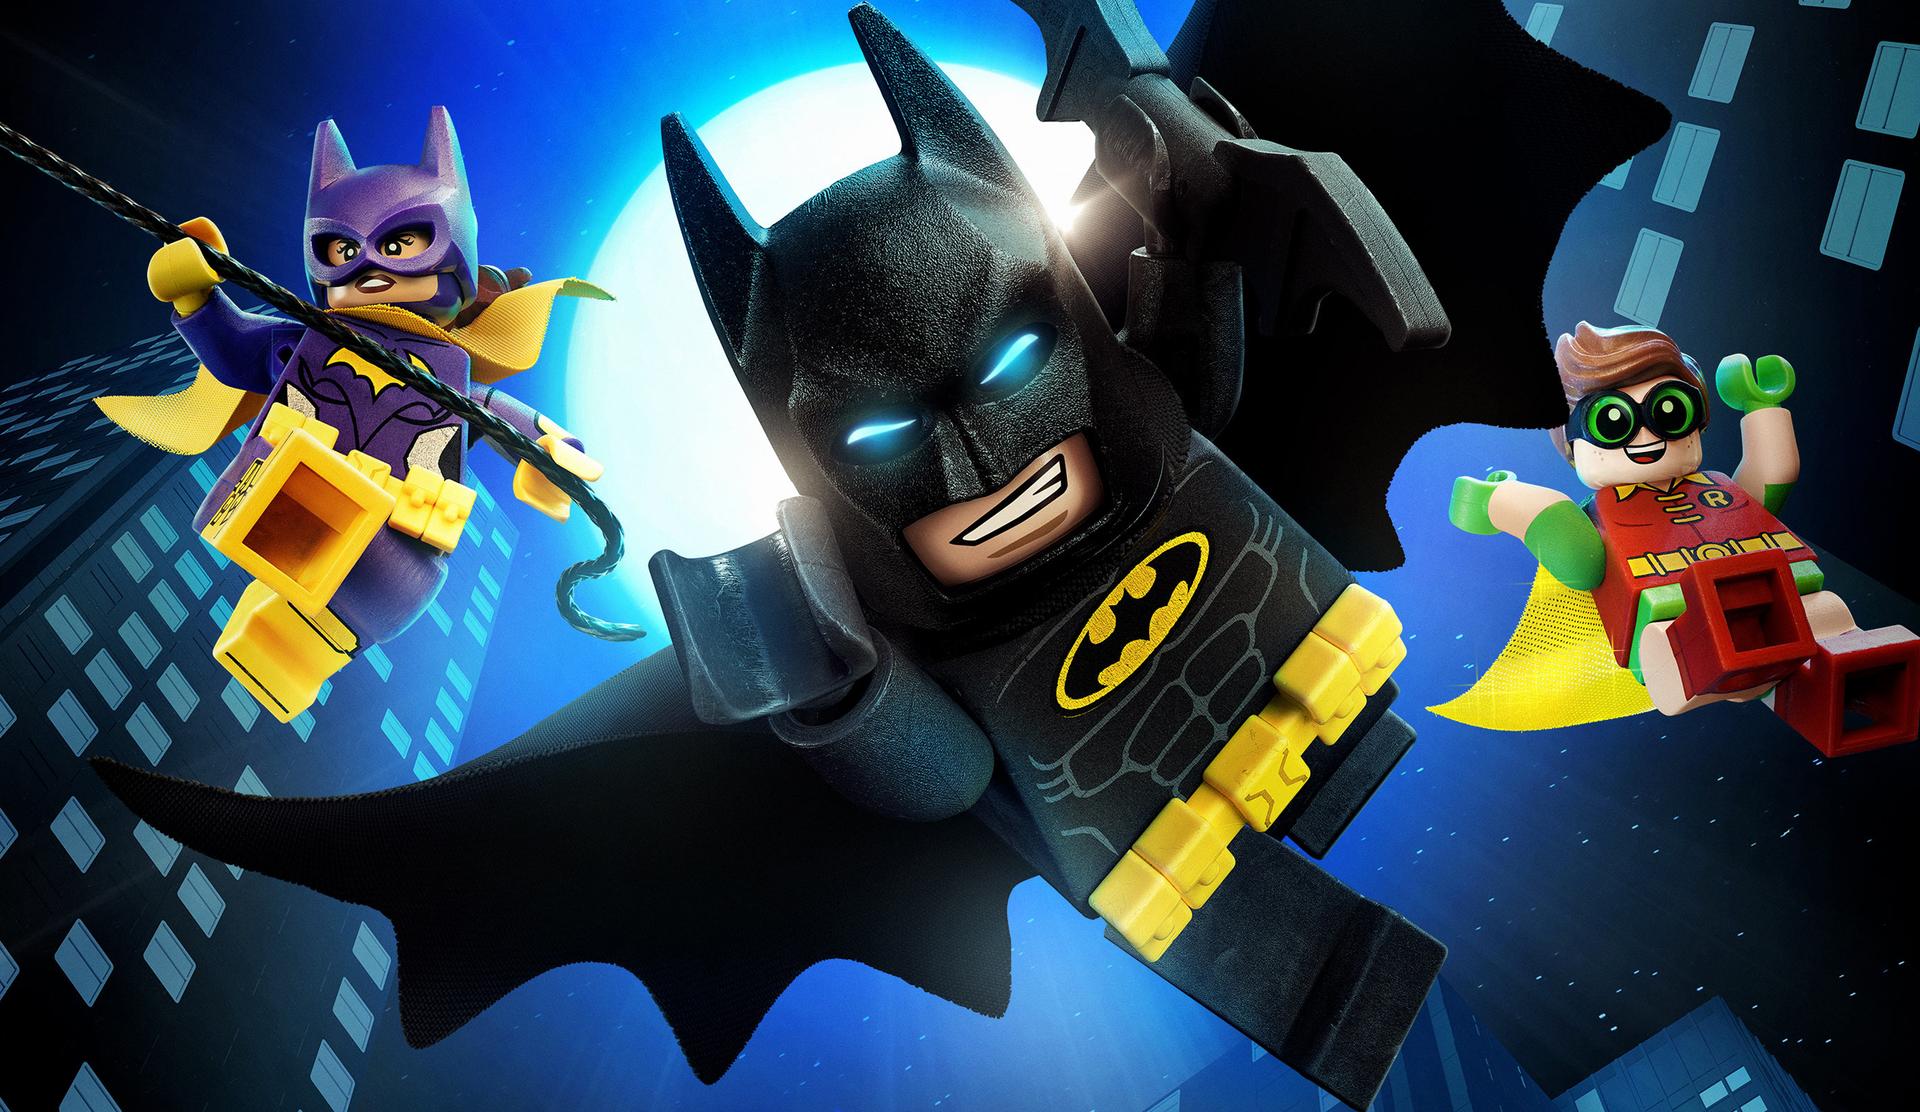 NORTHSIDE: Lego Batman Movie, Events Calendar